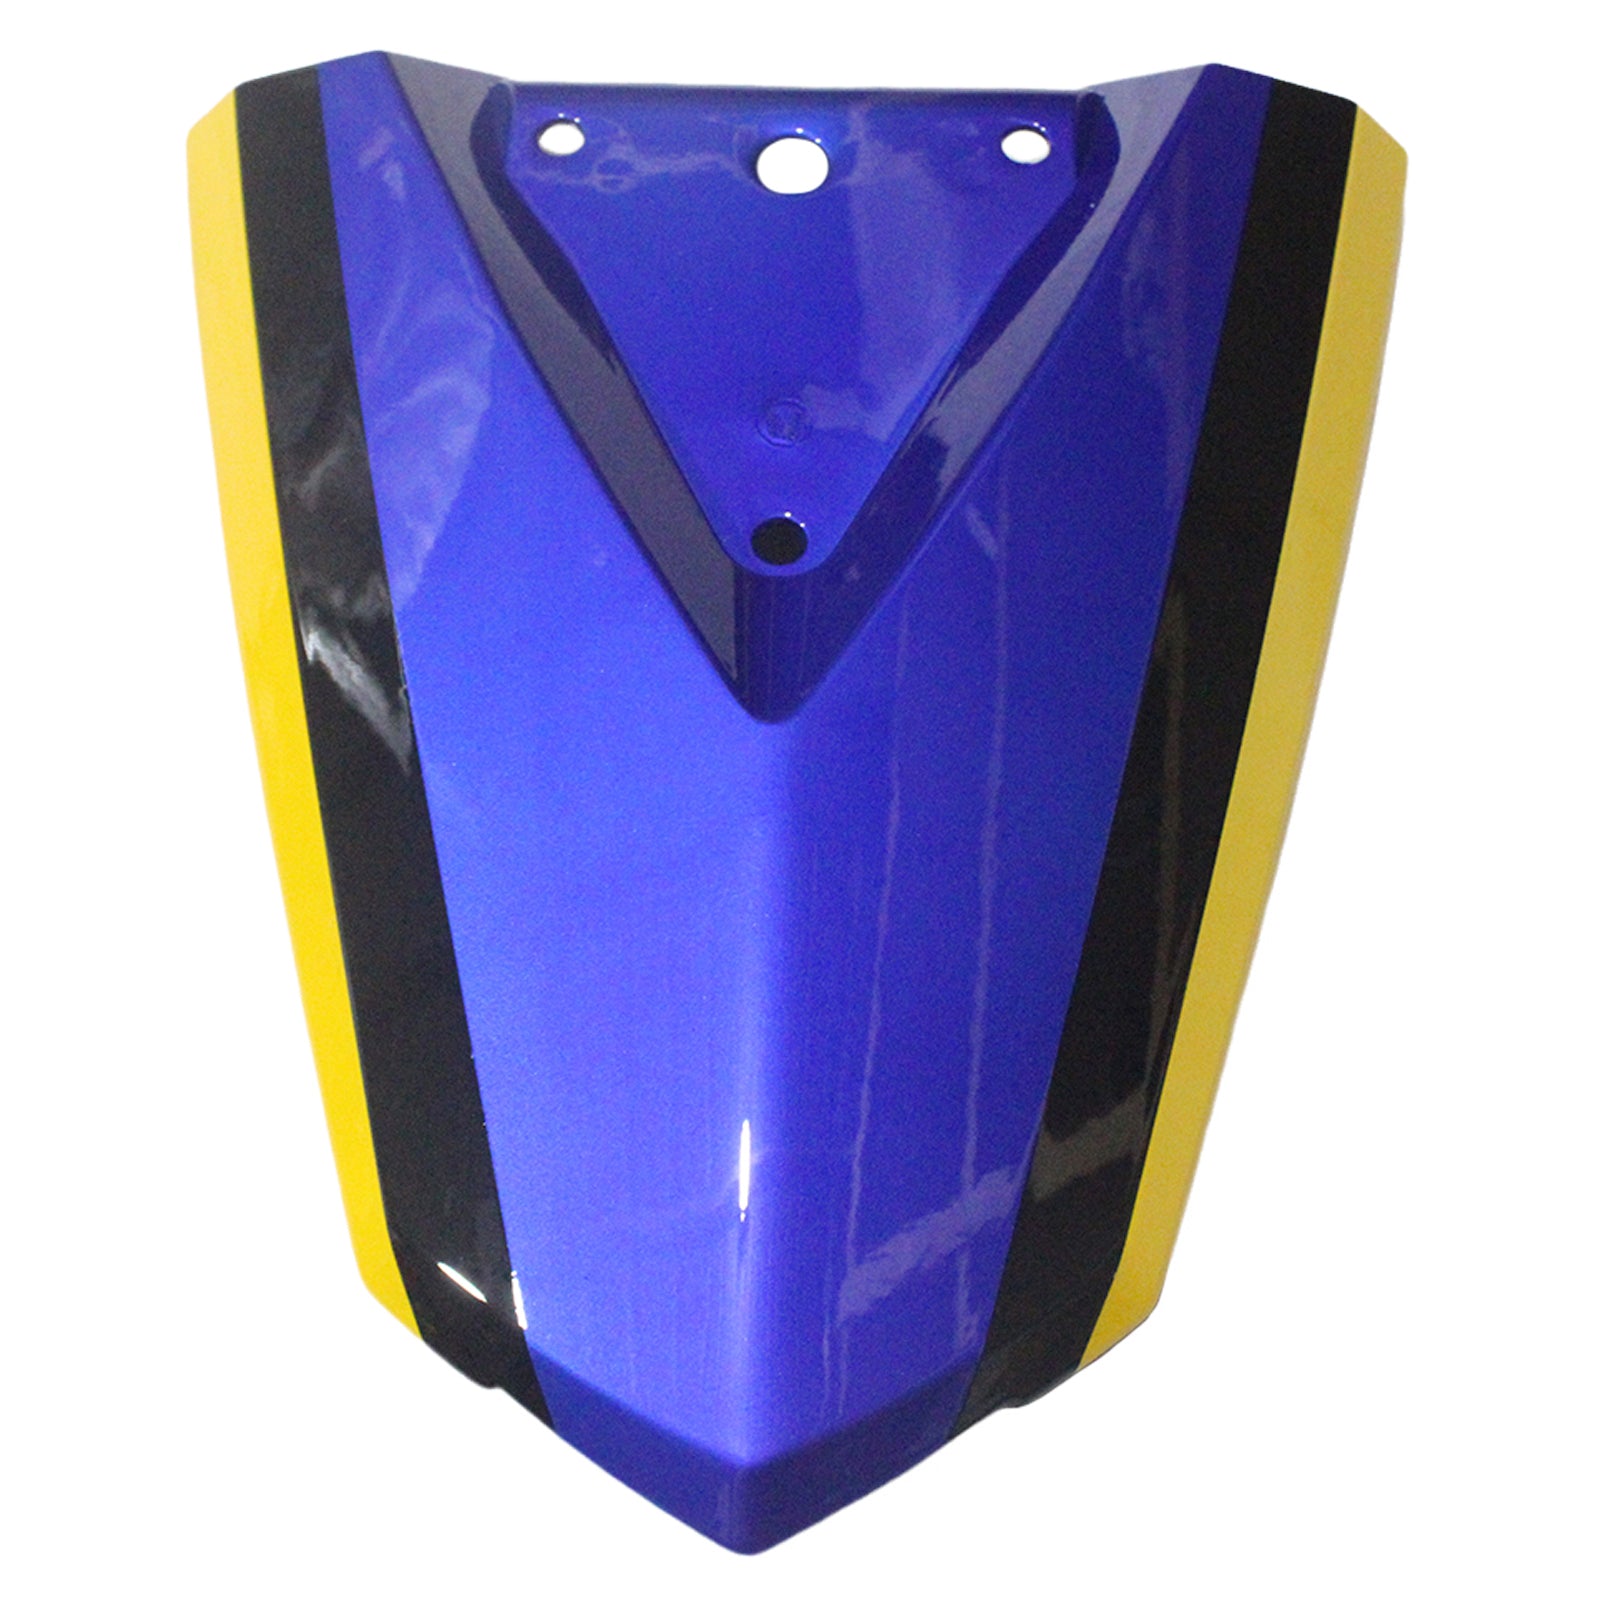 Amotopart YZF-R3 2014-2018 R25 2015-2017 Yamaha Blue&Yellow Style3 Fairing Kit